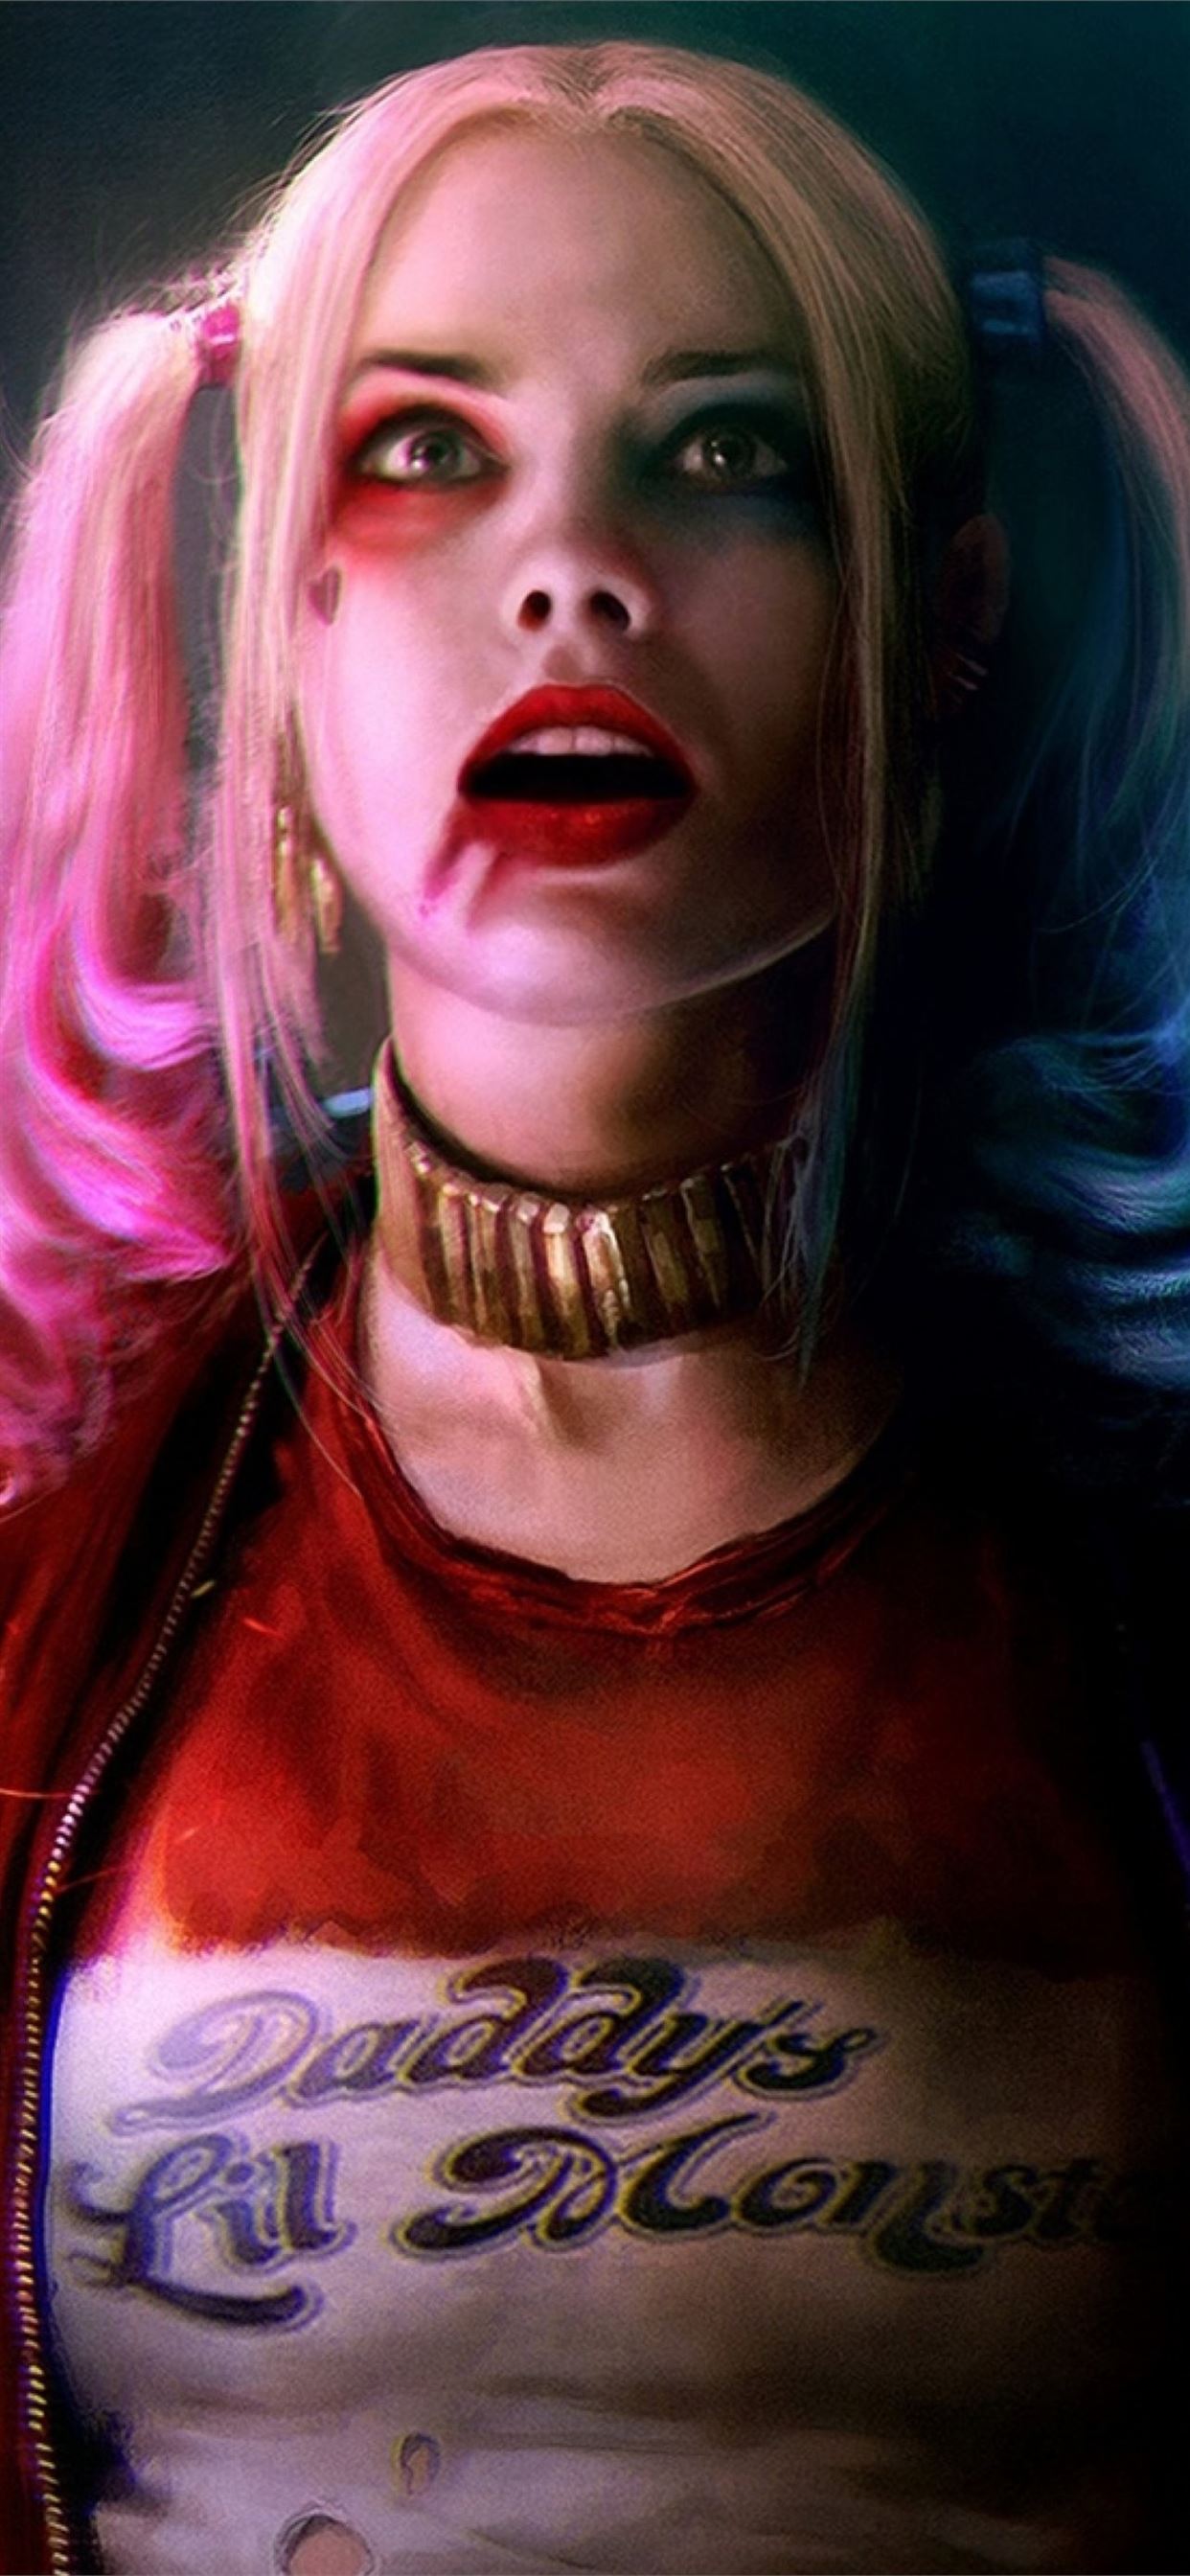 Harley Quinn Suicide Squad Margot Robbie for Samsu. iPhone Wallpaper Free Download